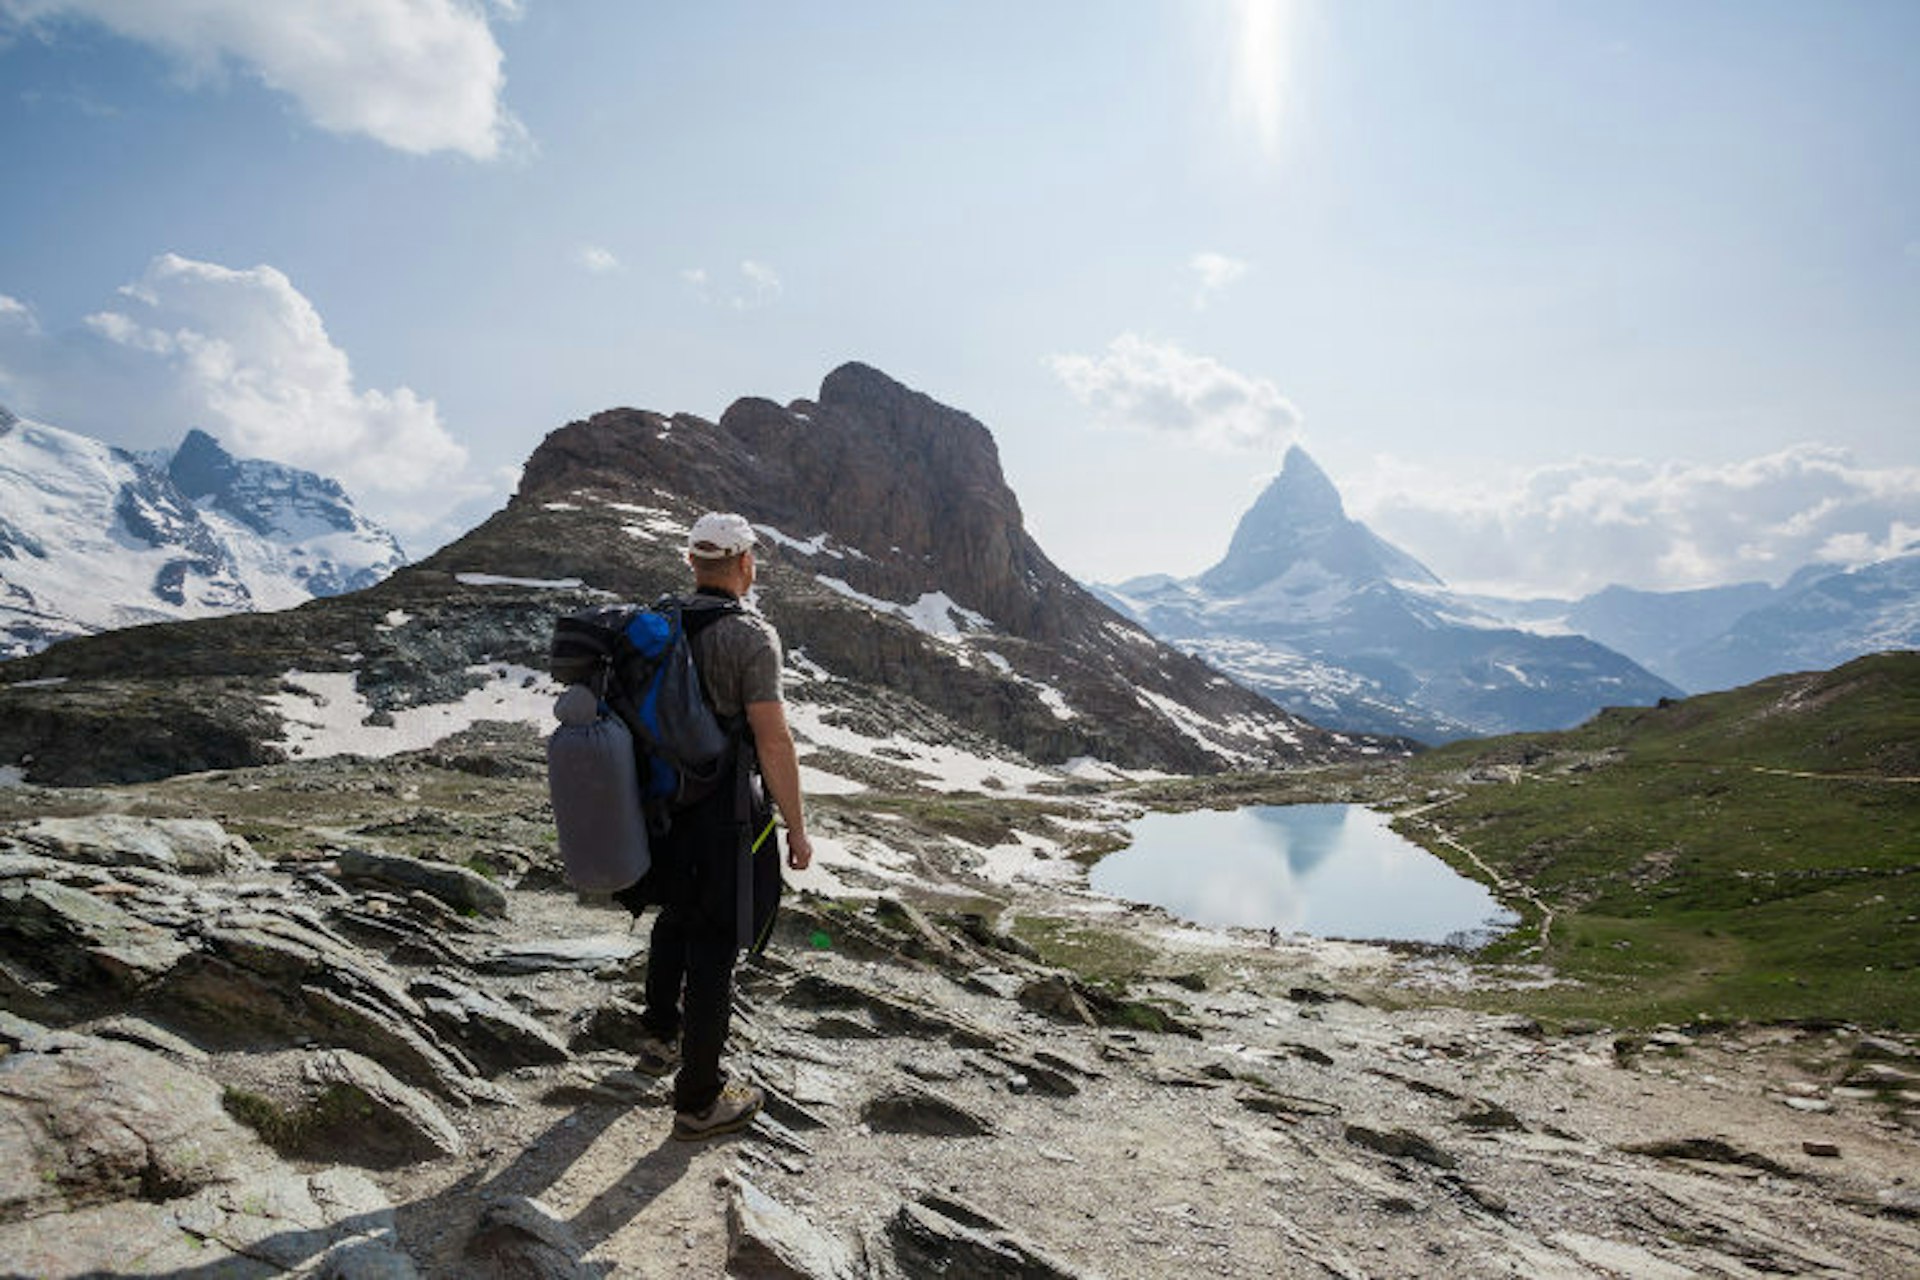 Hiker admiring the stunning Matterhorn view. Image by Matteo Colombo/Photostock/Getty